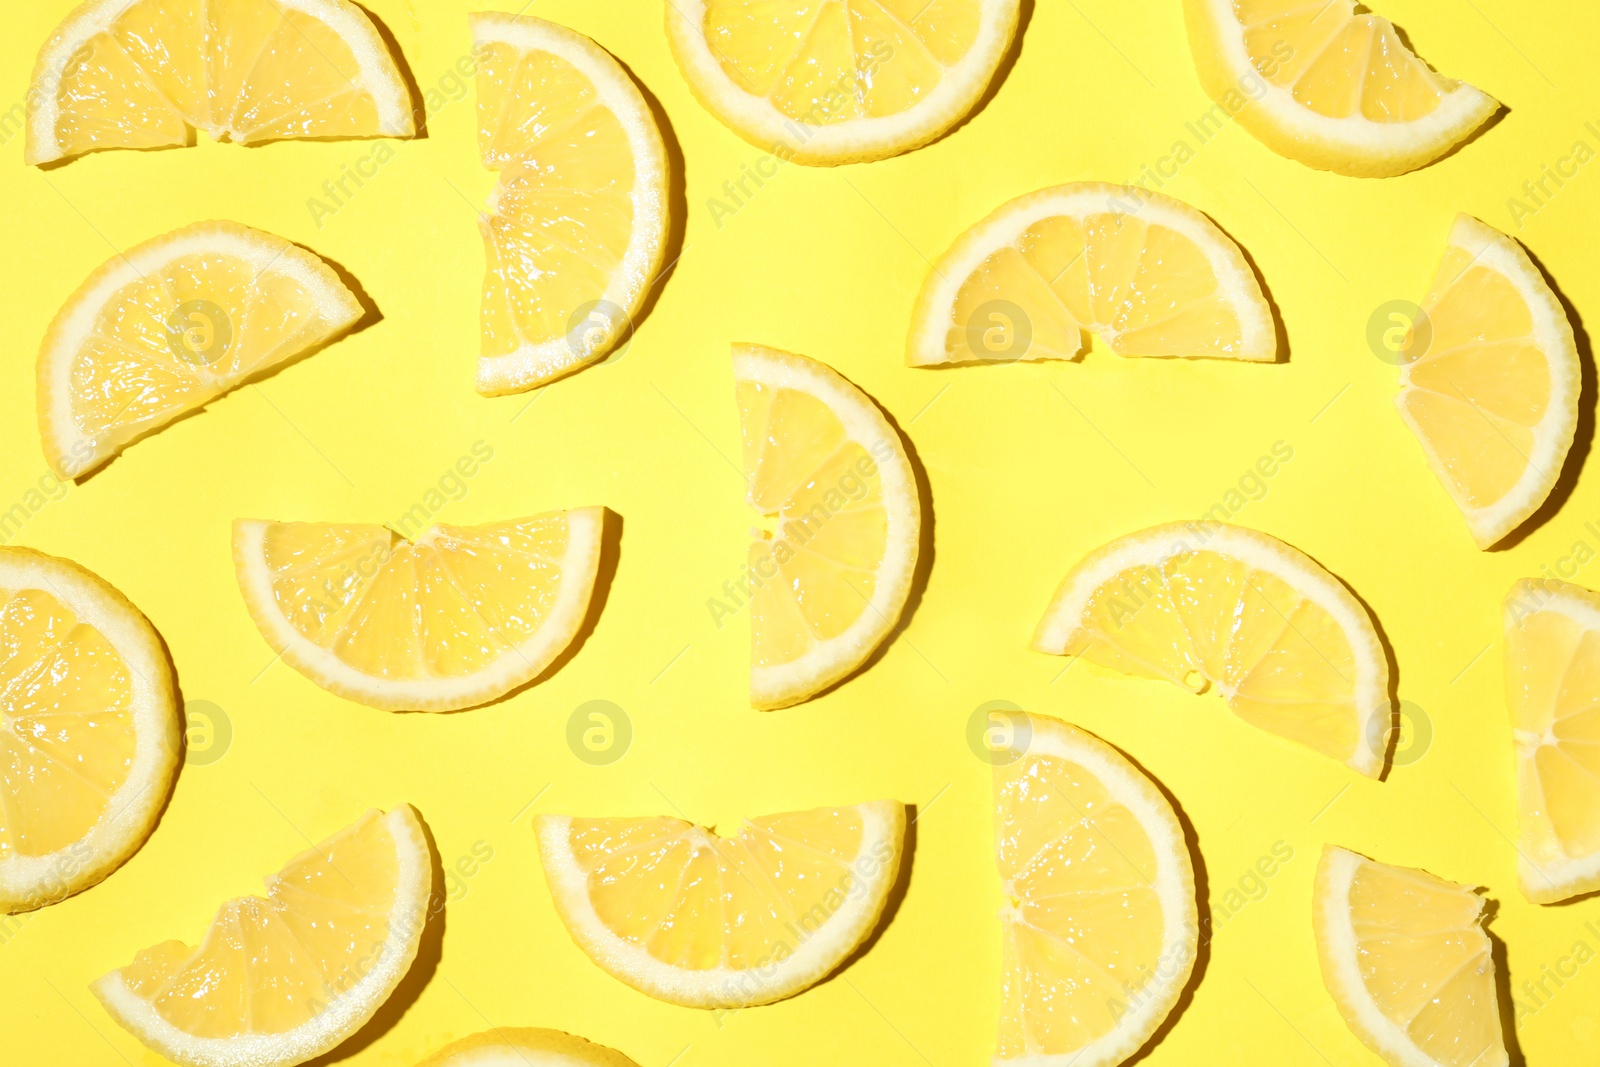 Photo of Juicy lemon slices on yellow background, flat lay